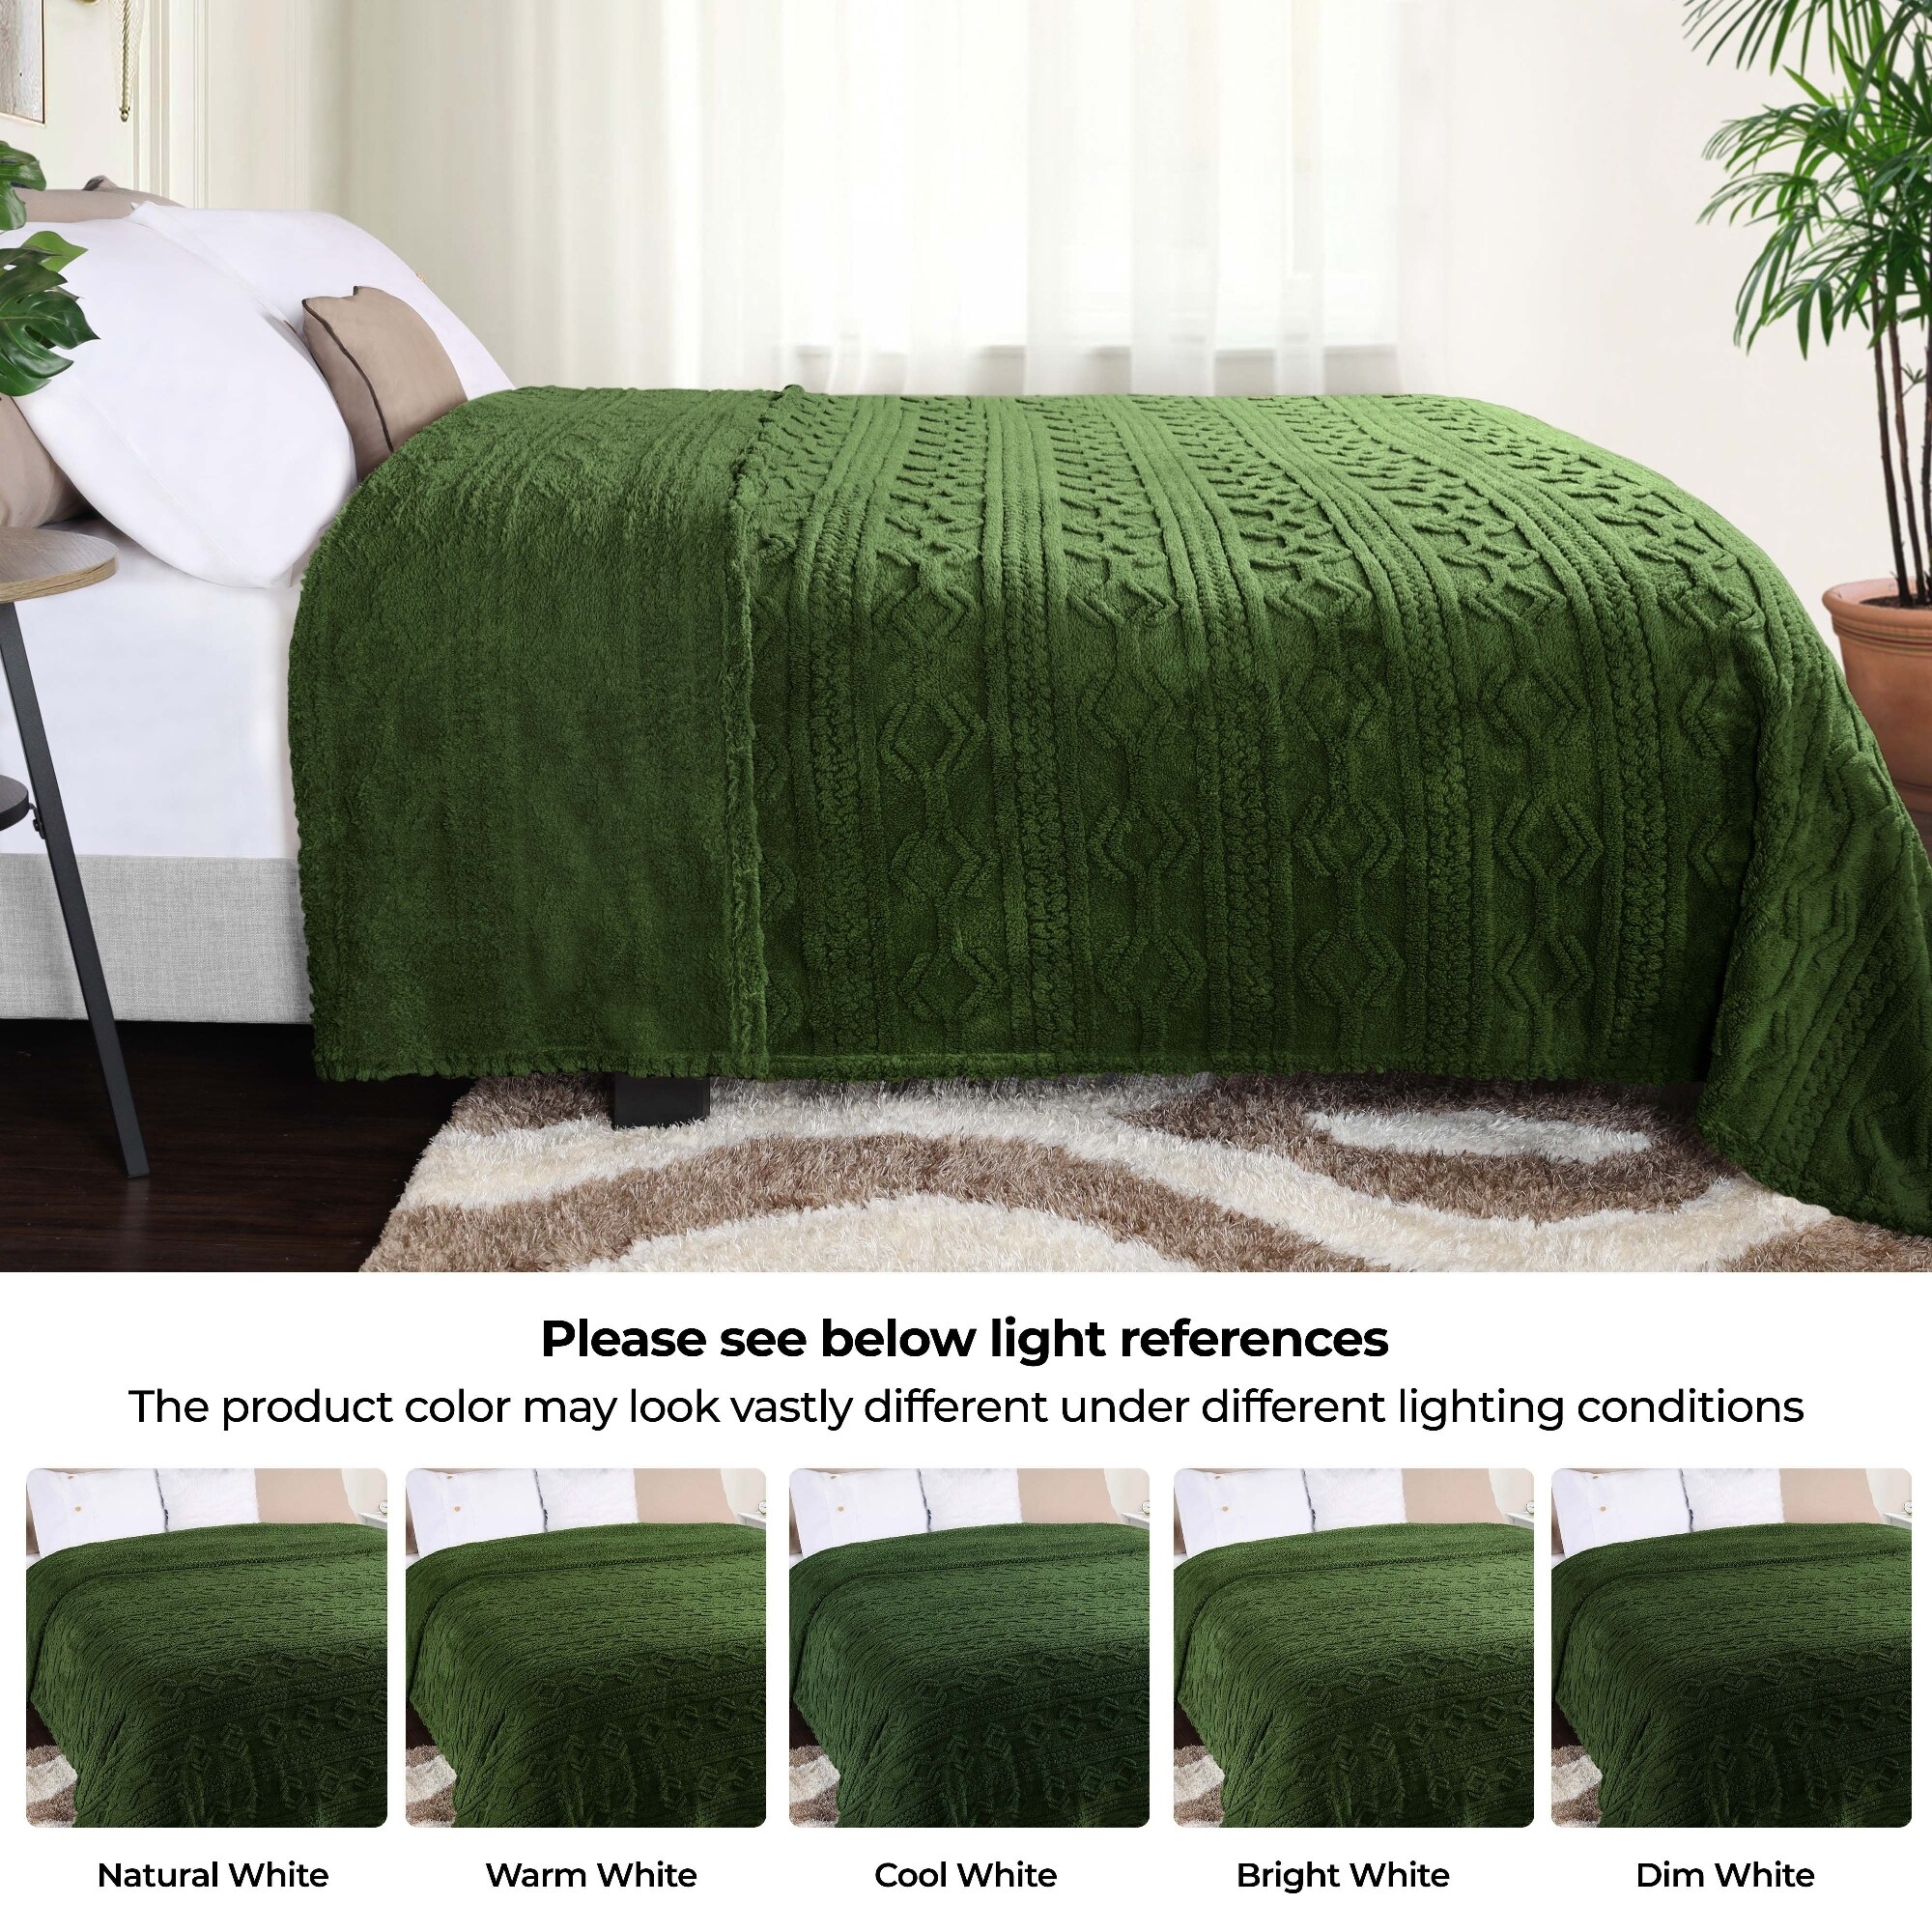 GY Throw Blankets Checkered Fuzzy Sage Green Blanket Plaid Decorative Green Throw Blanket - Super Soft Warm Cozy Fluffy Blanket